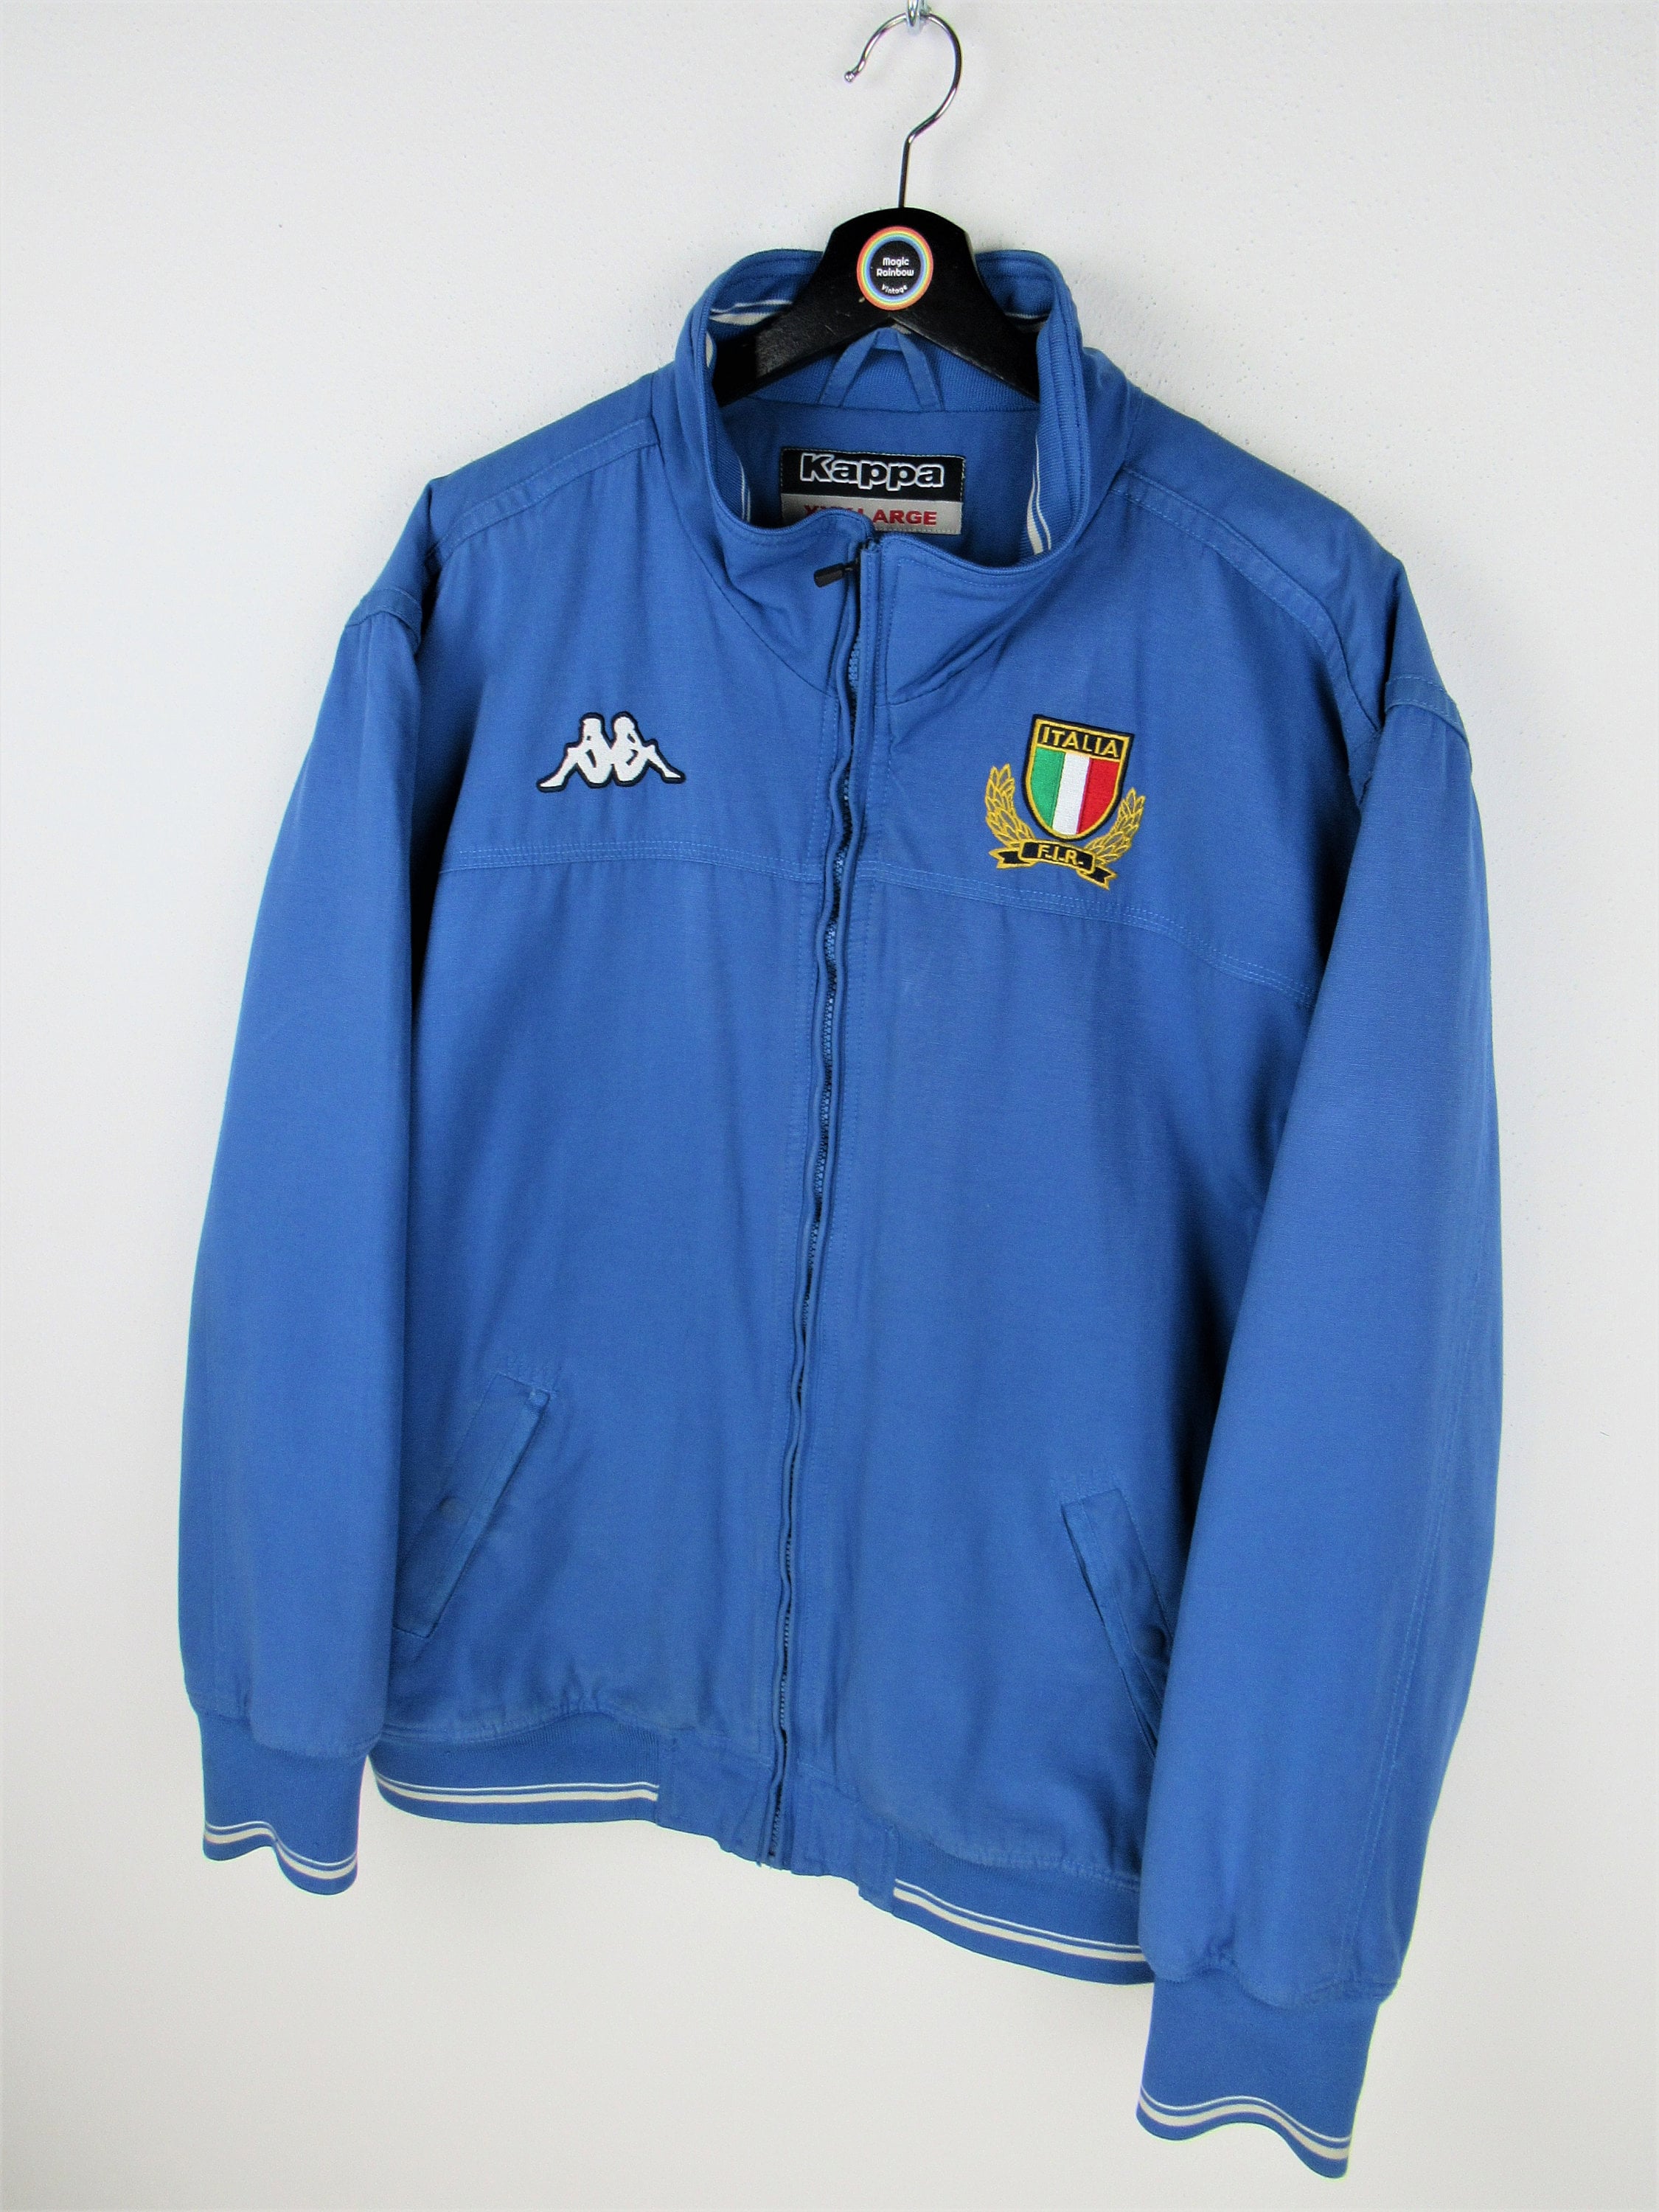 Kappa Federazione Italiana Rugby Vintage 80's Jacket - Etsy